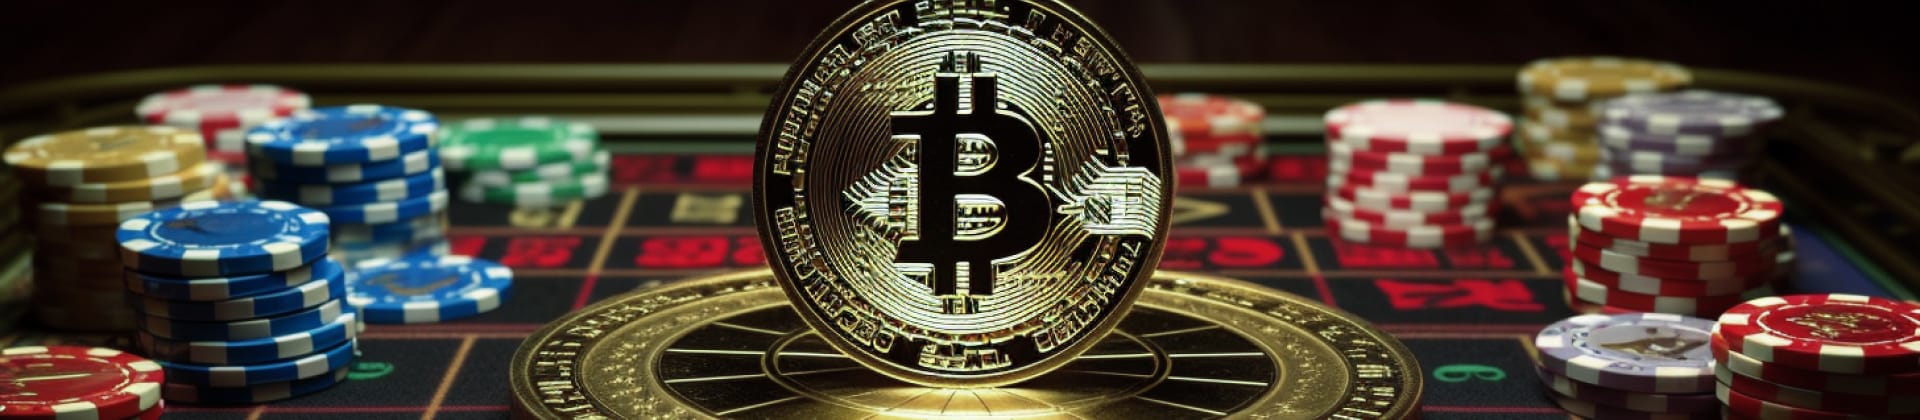 Pros of bitcoin casino sites